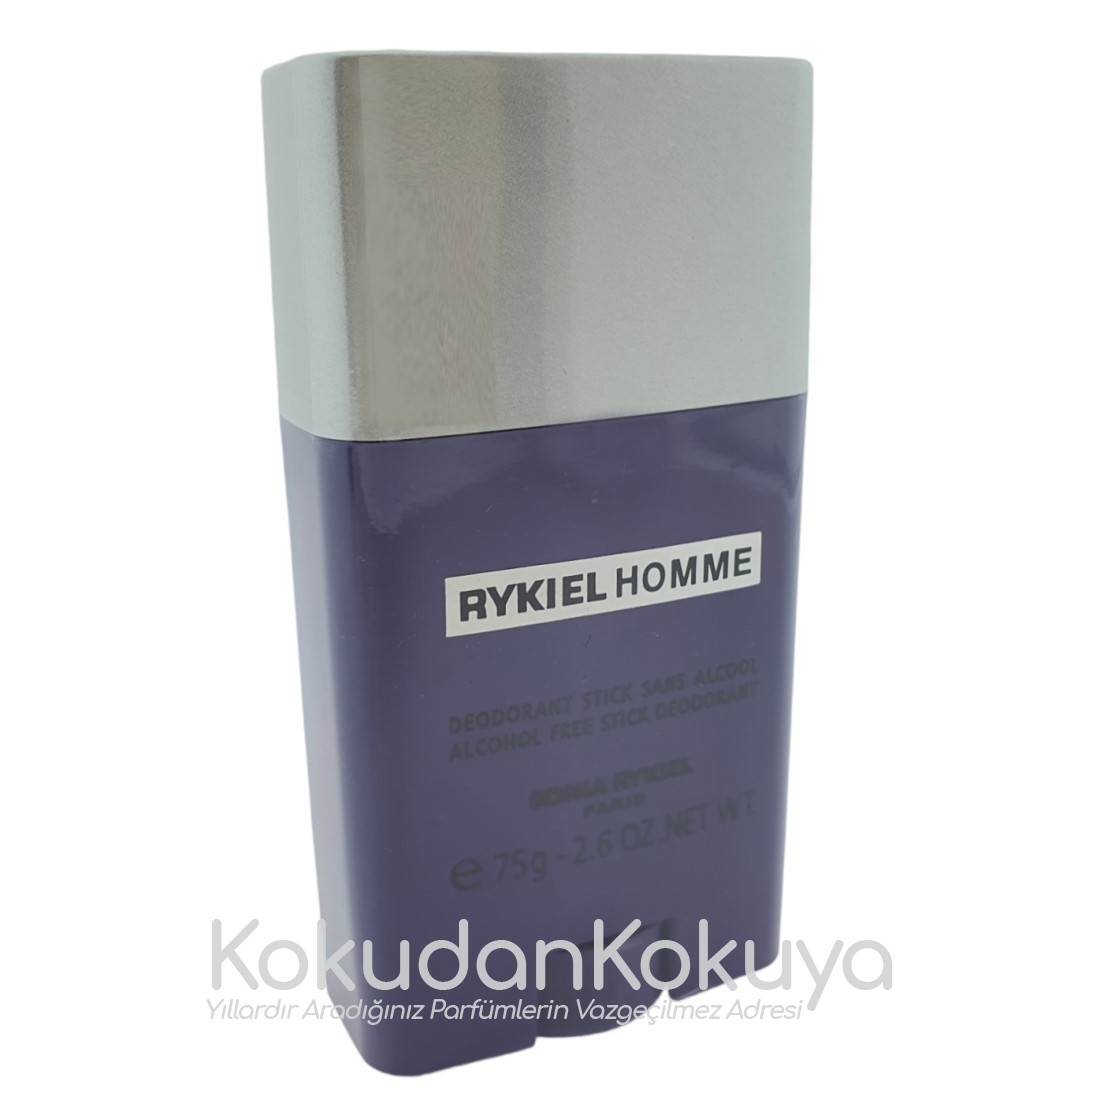 SONIA RYKIEL Rykiel Homme (Vintage) Deodorant Erkek 75ml Deodorant Stick 